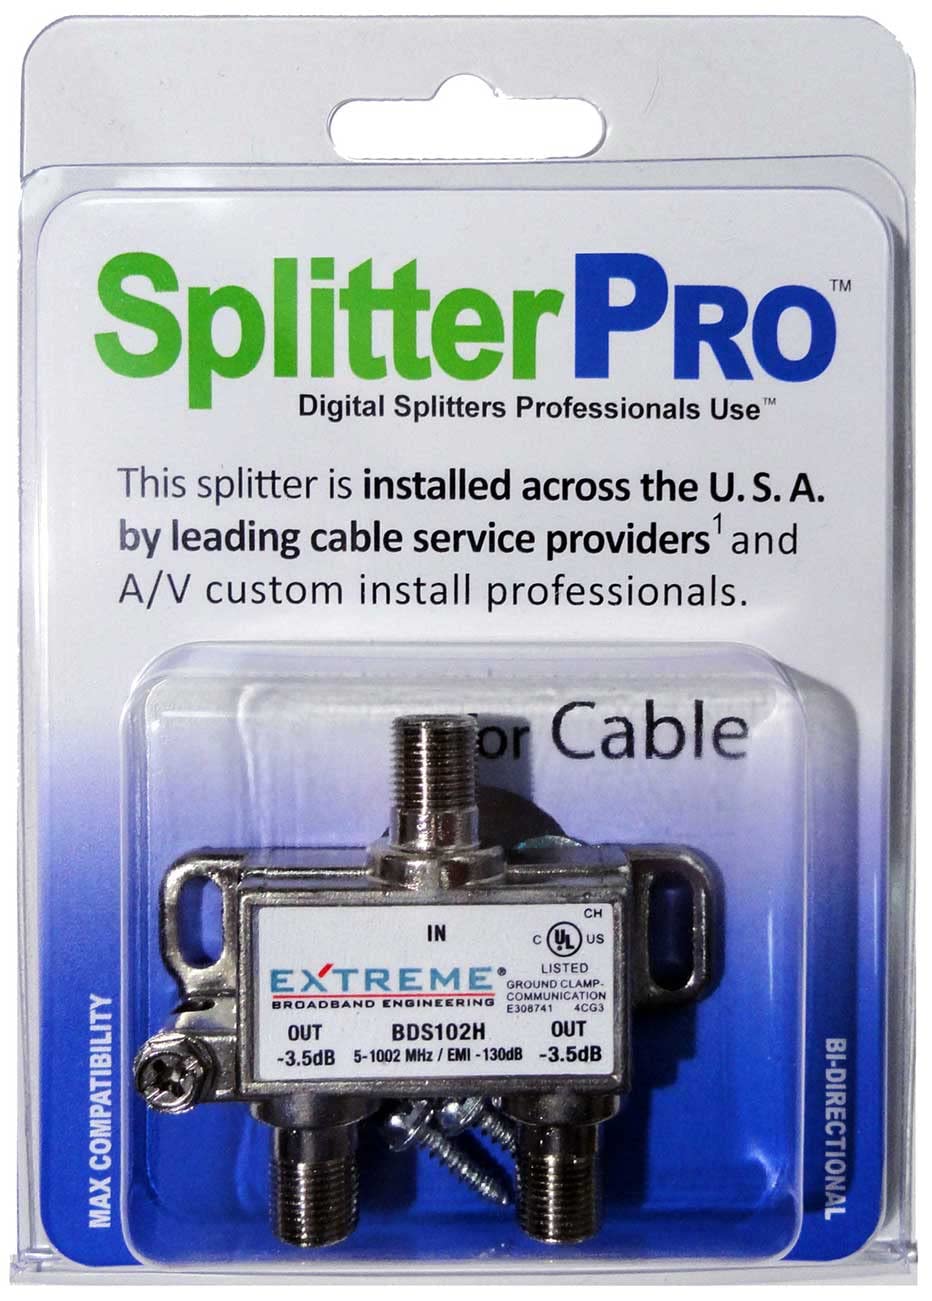 SplitterPRO - Digital Splitters Professionals Install [...]